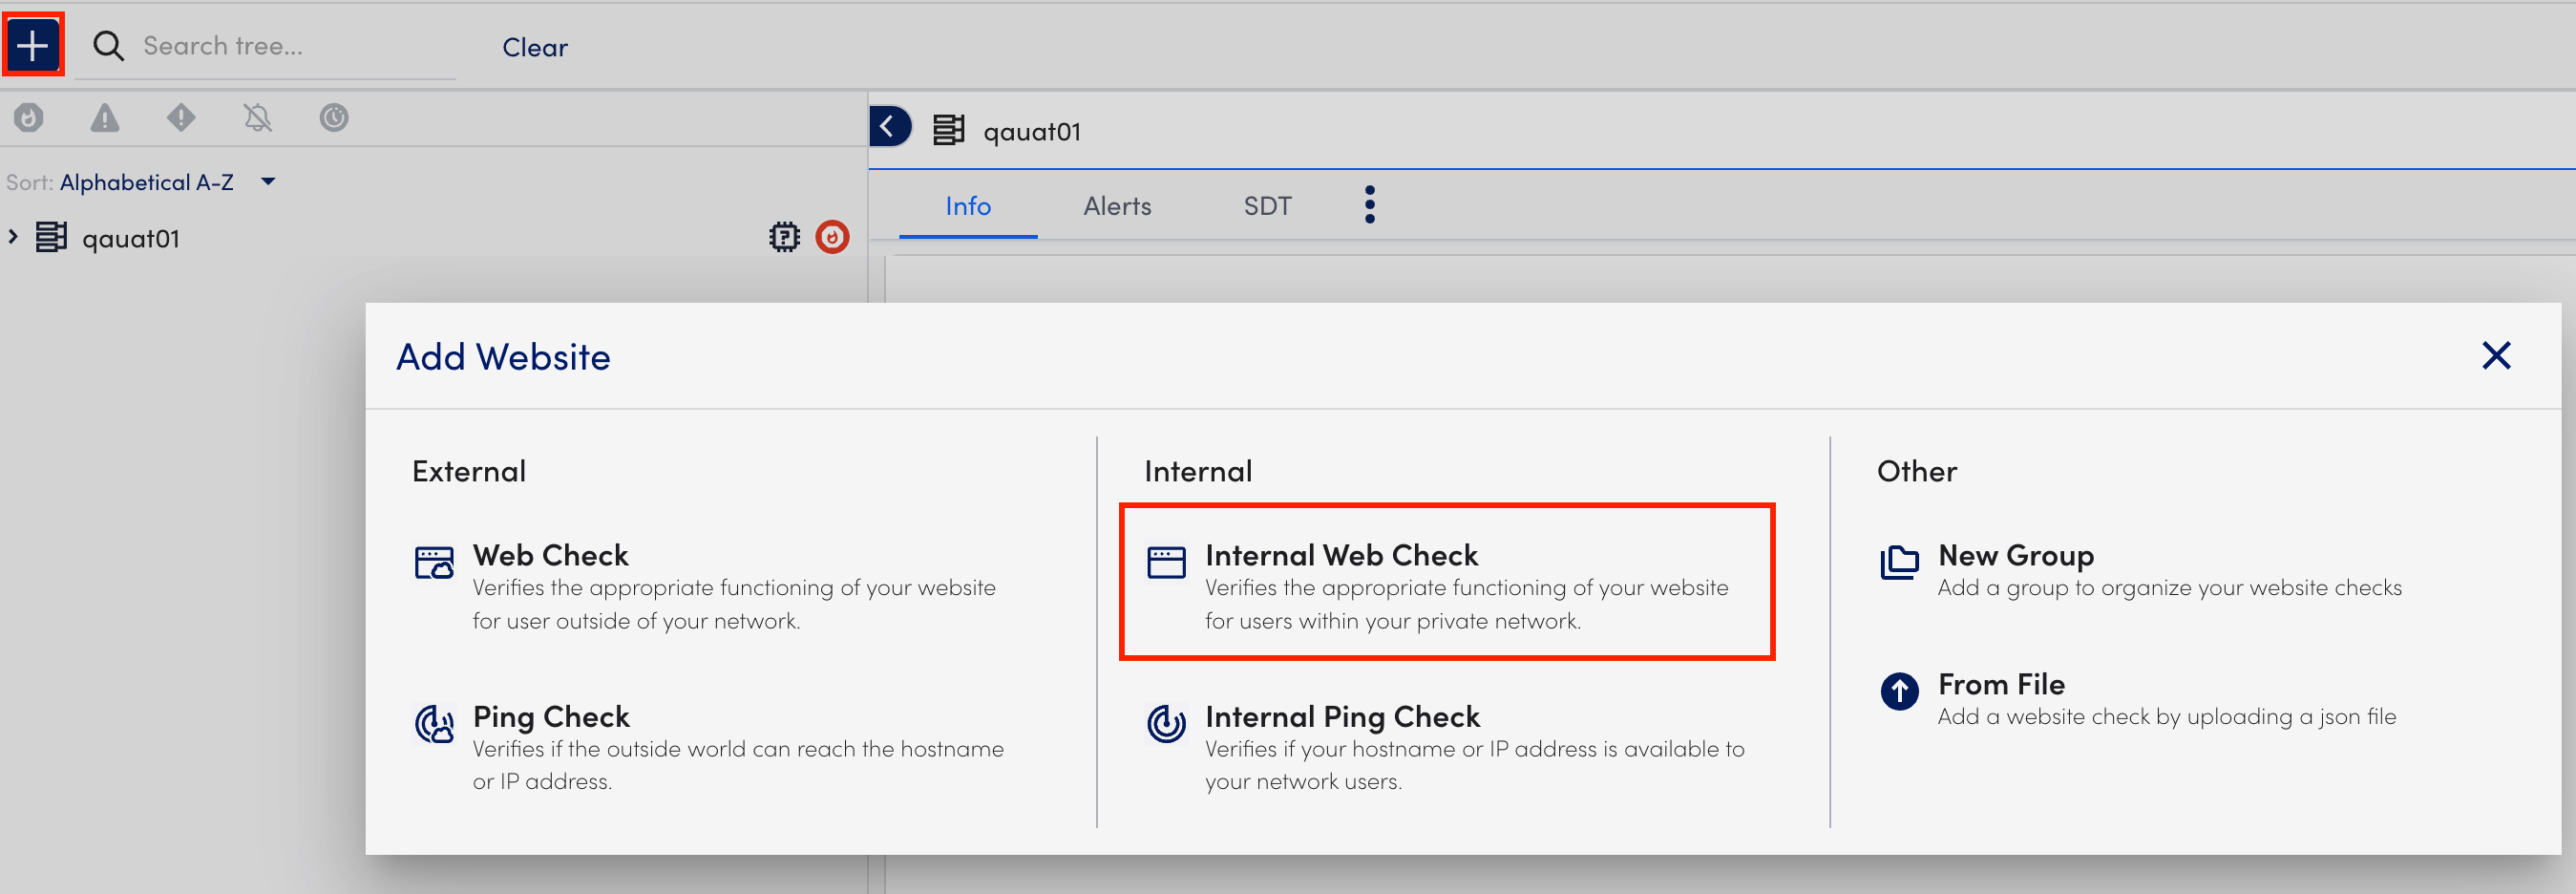 Add Internal Web Check modal